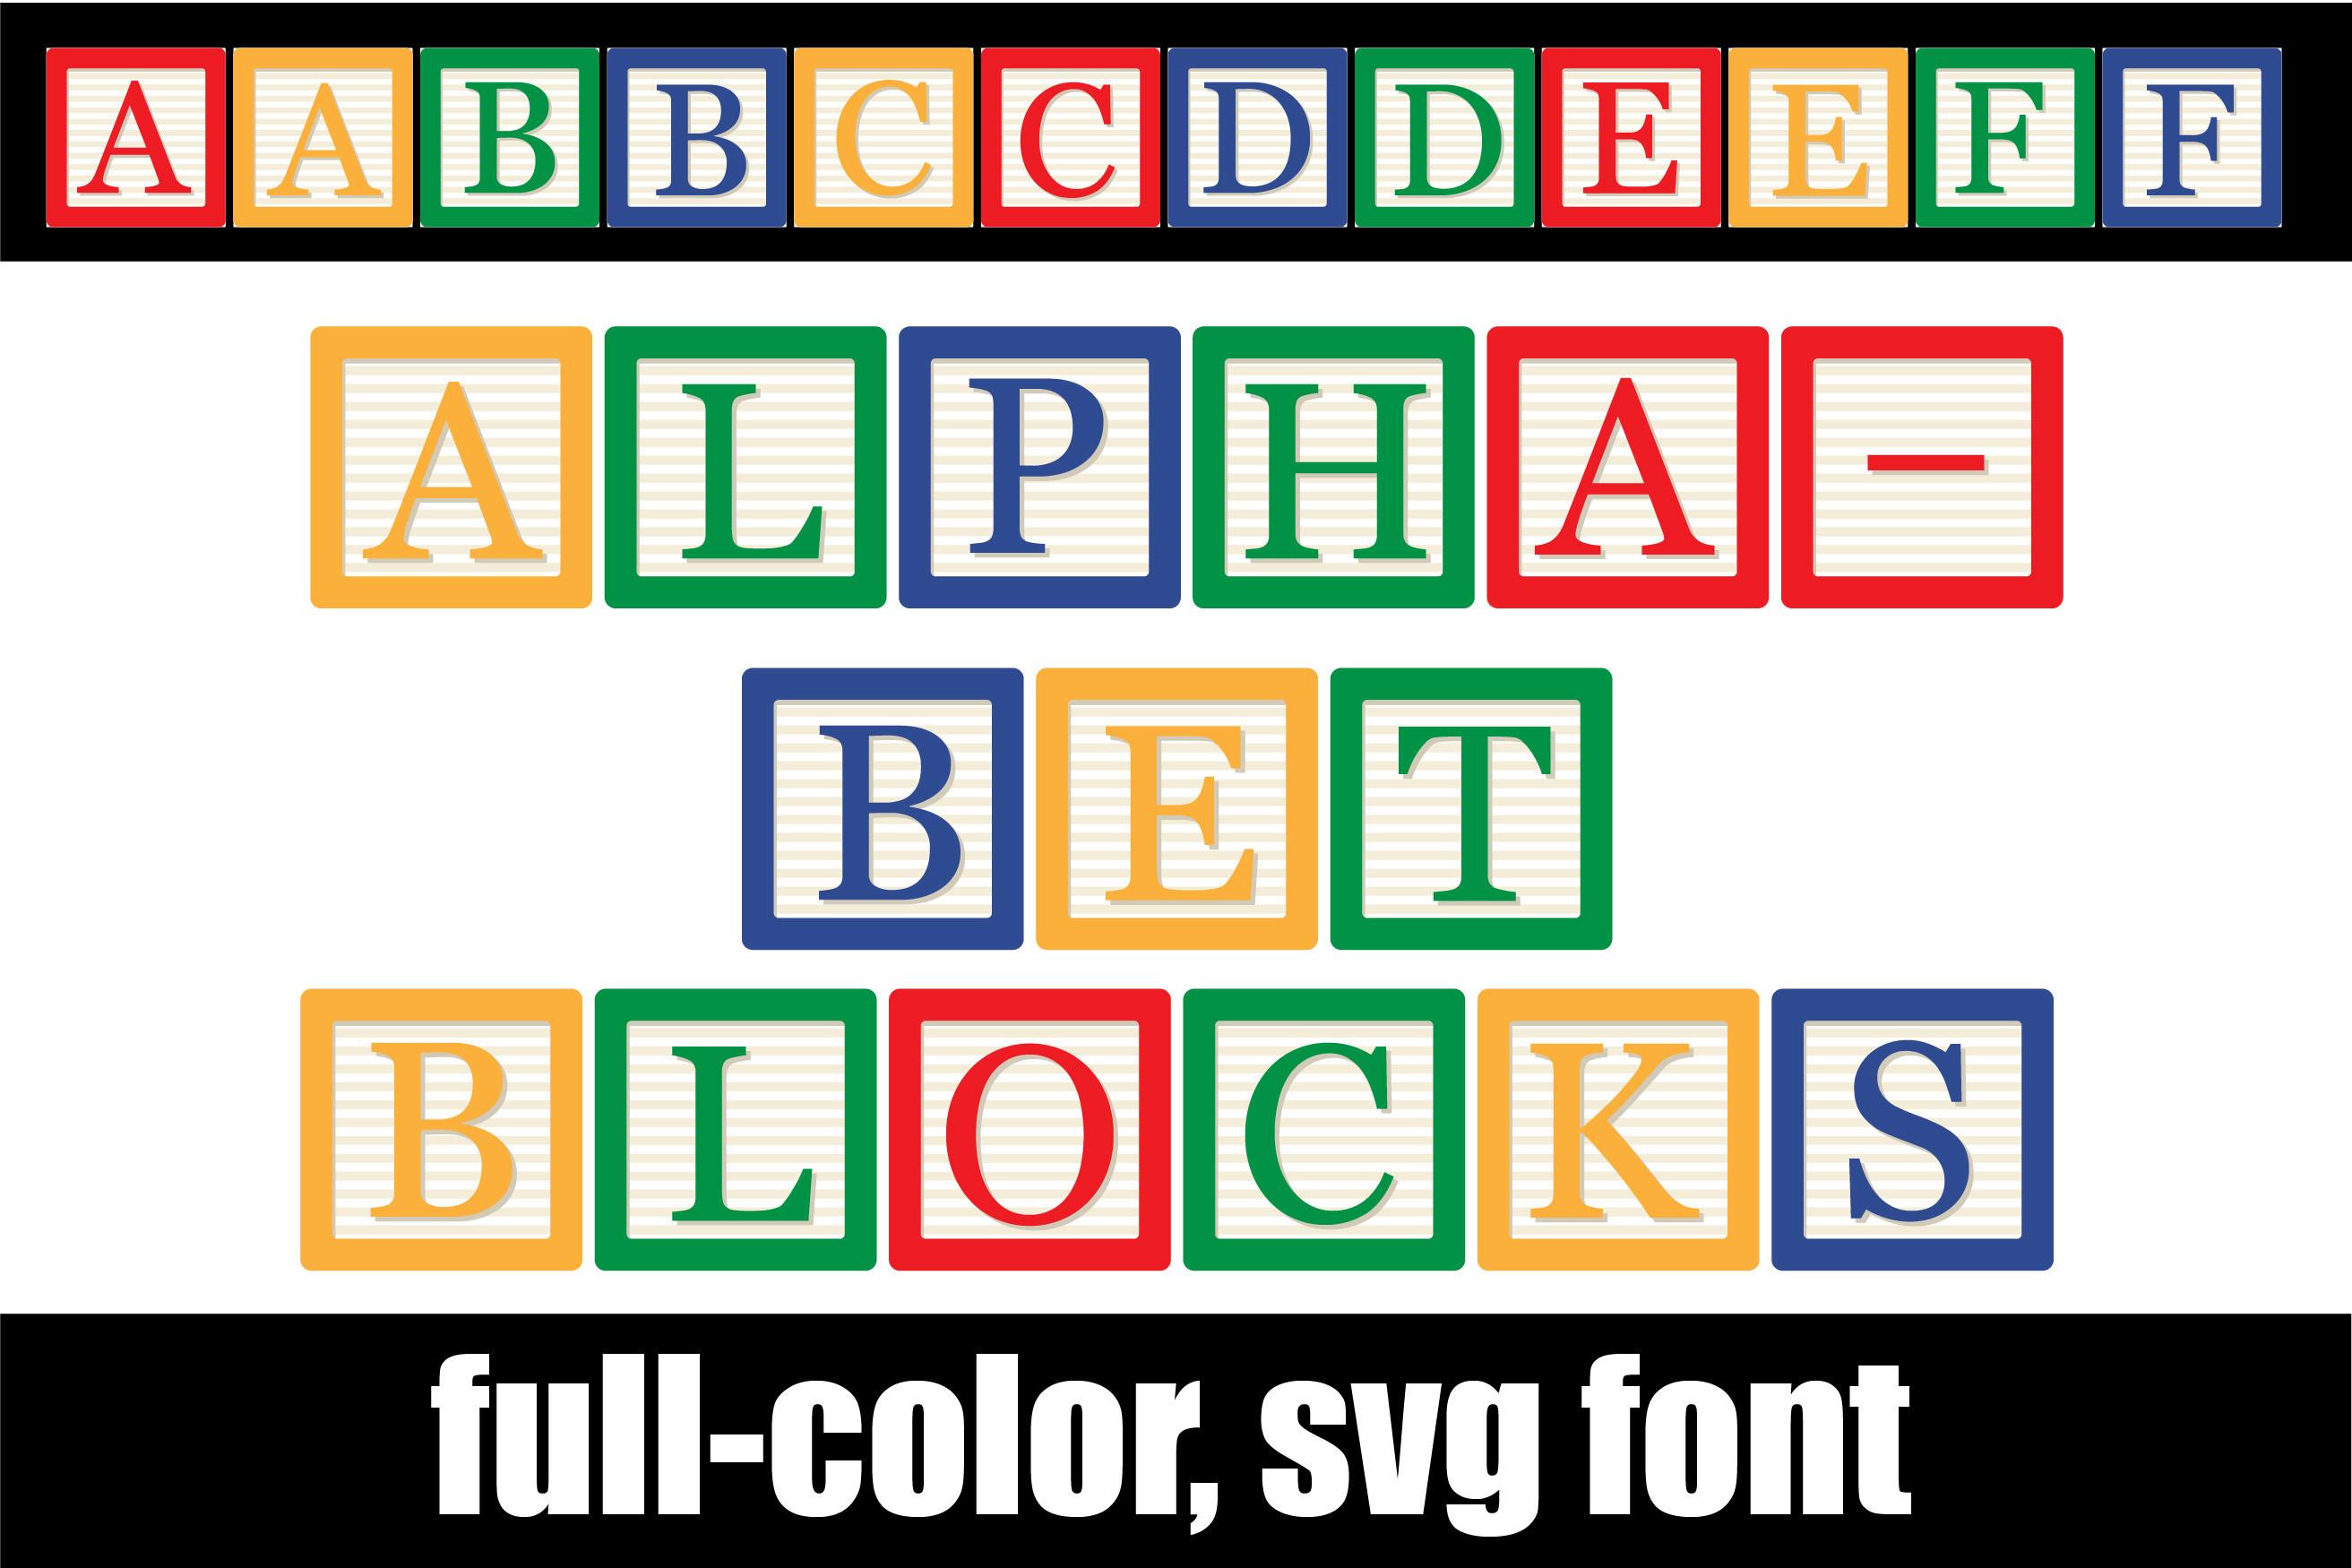 Alphabet Blocks Font